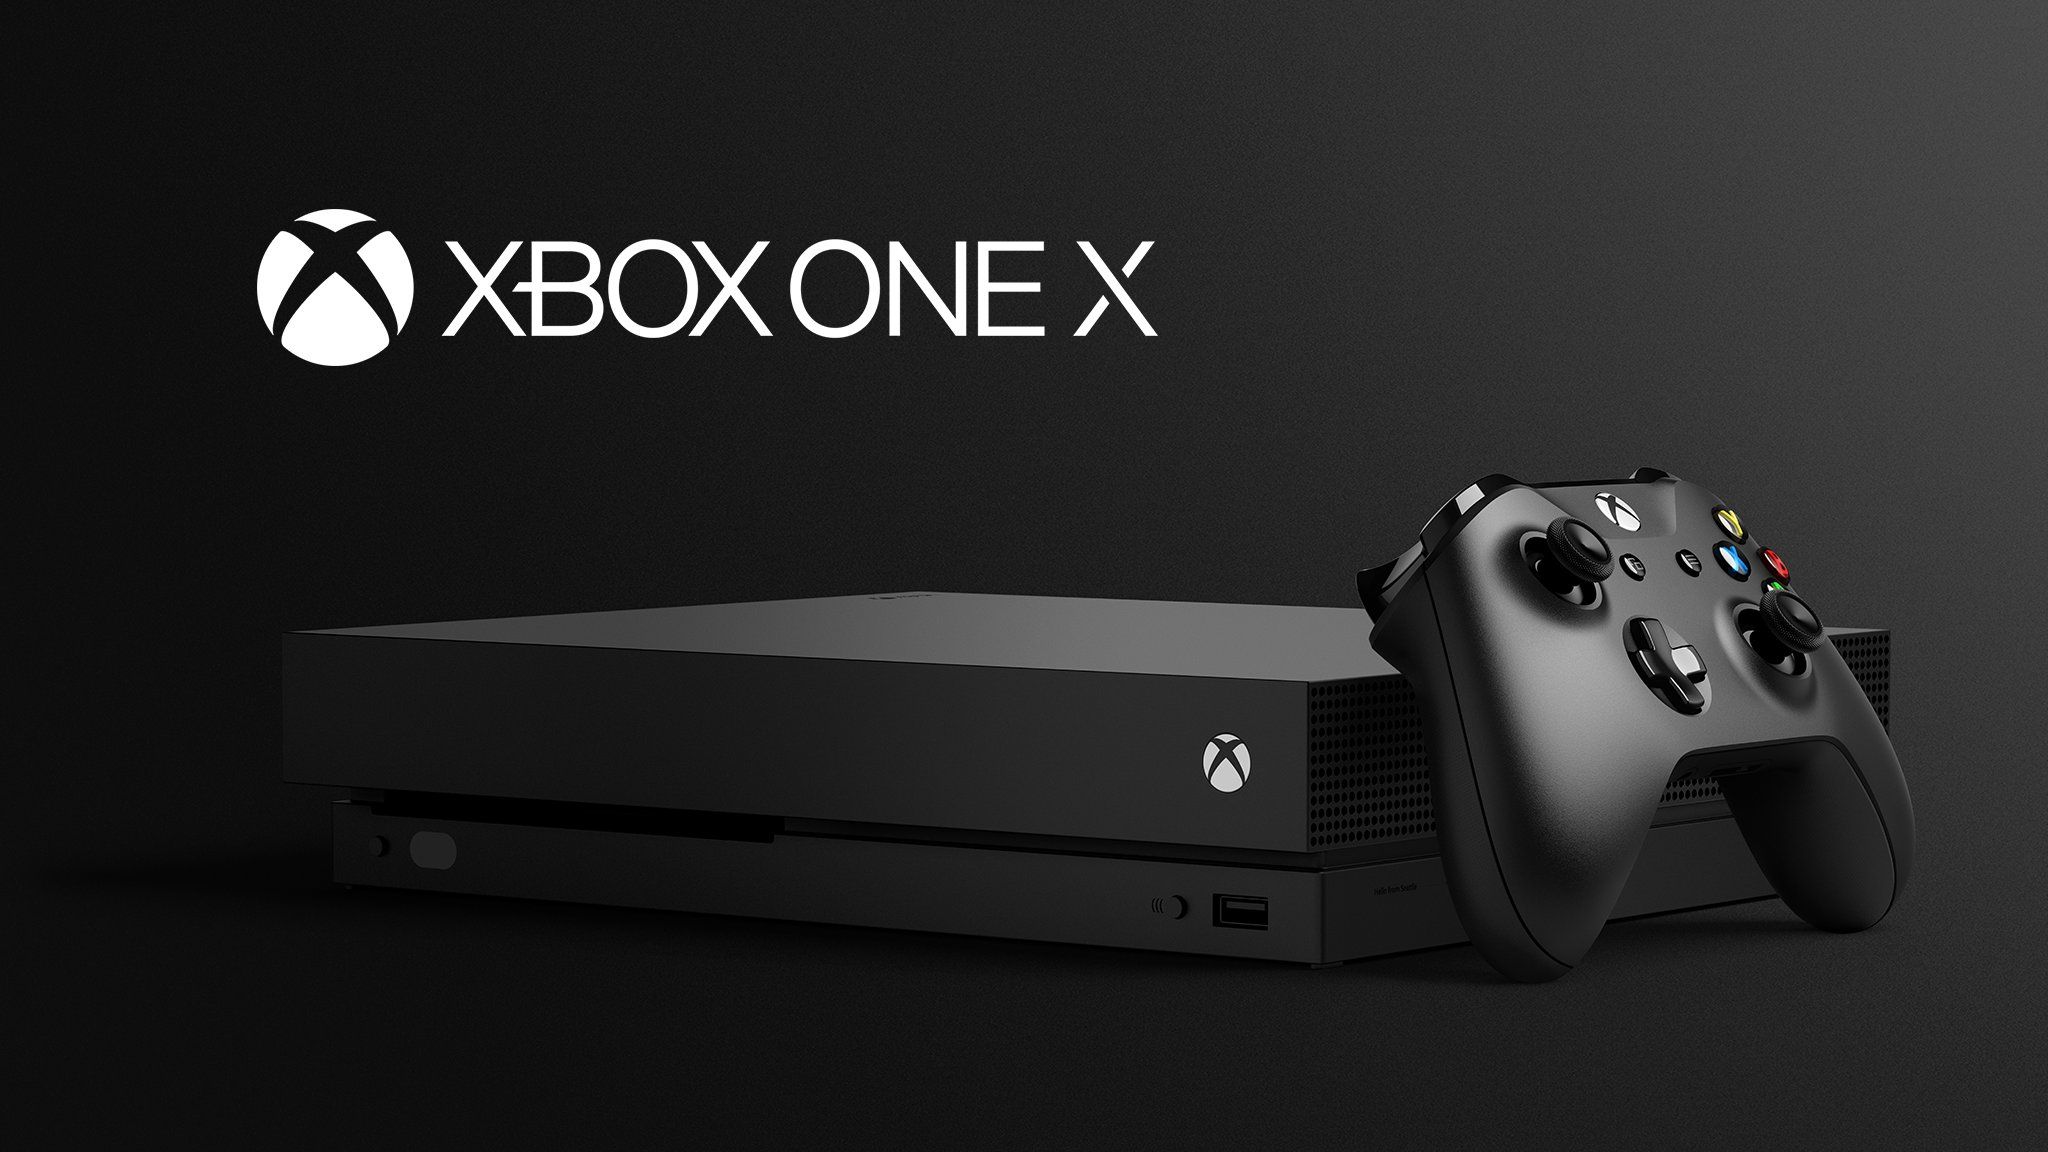 Dishonored 2 - Xbox One (SEMI-NOVO)